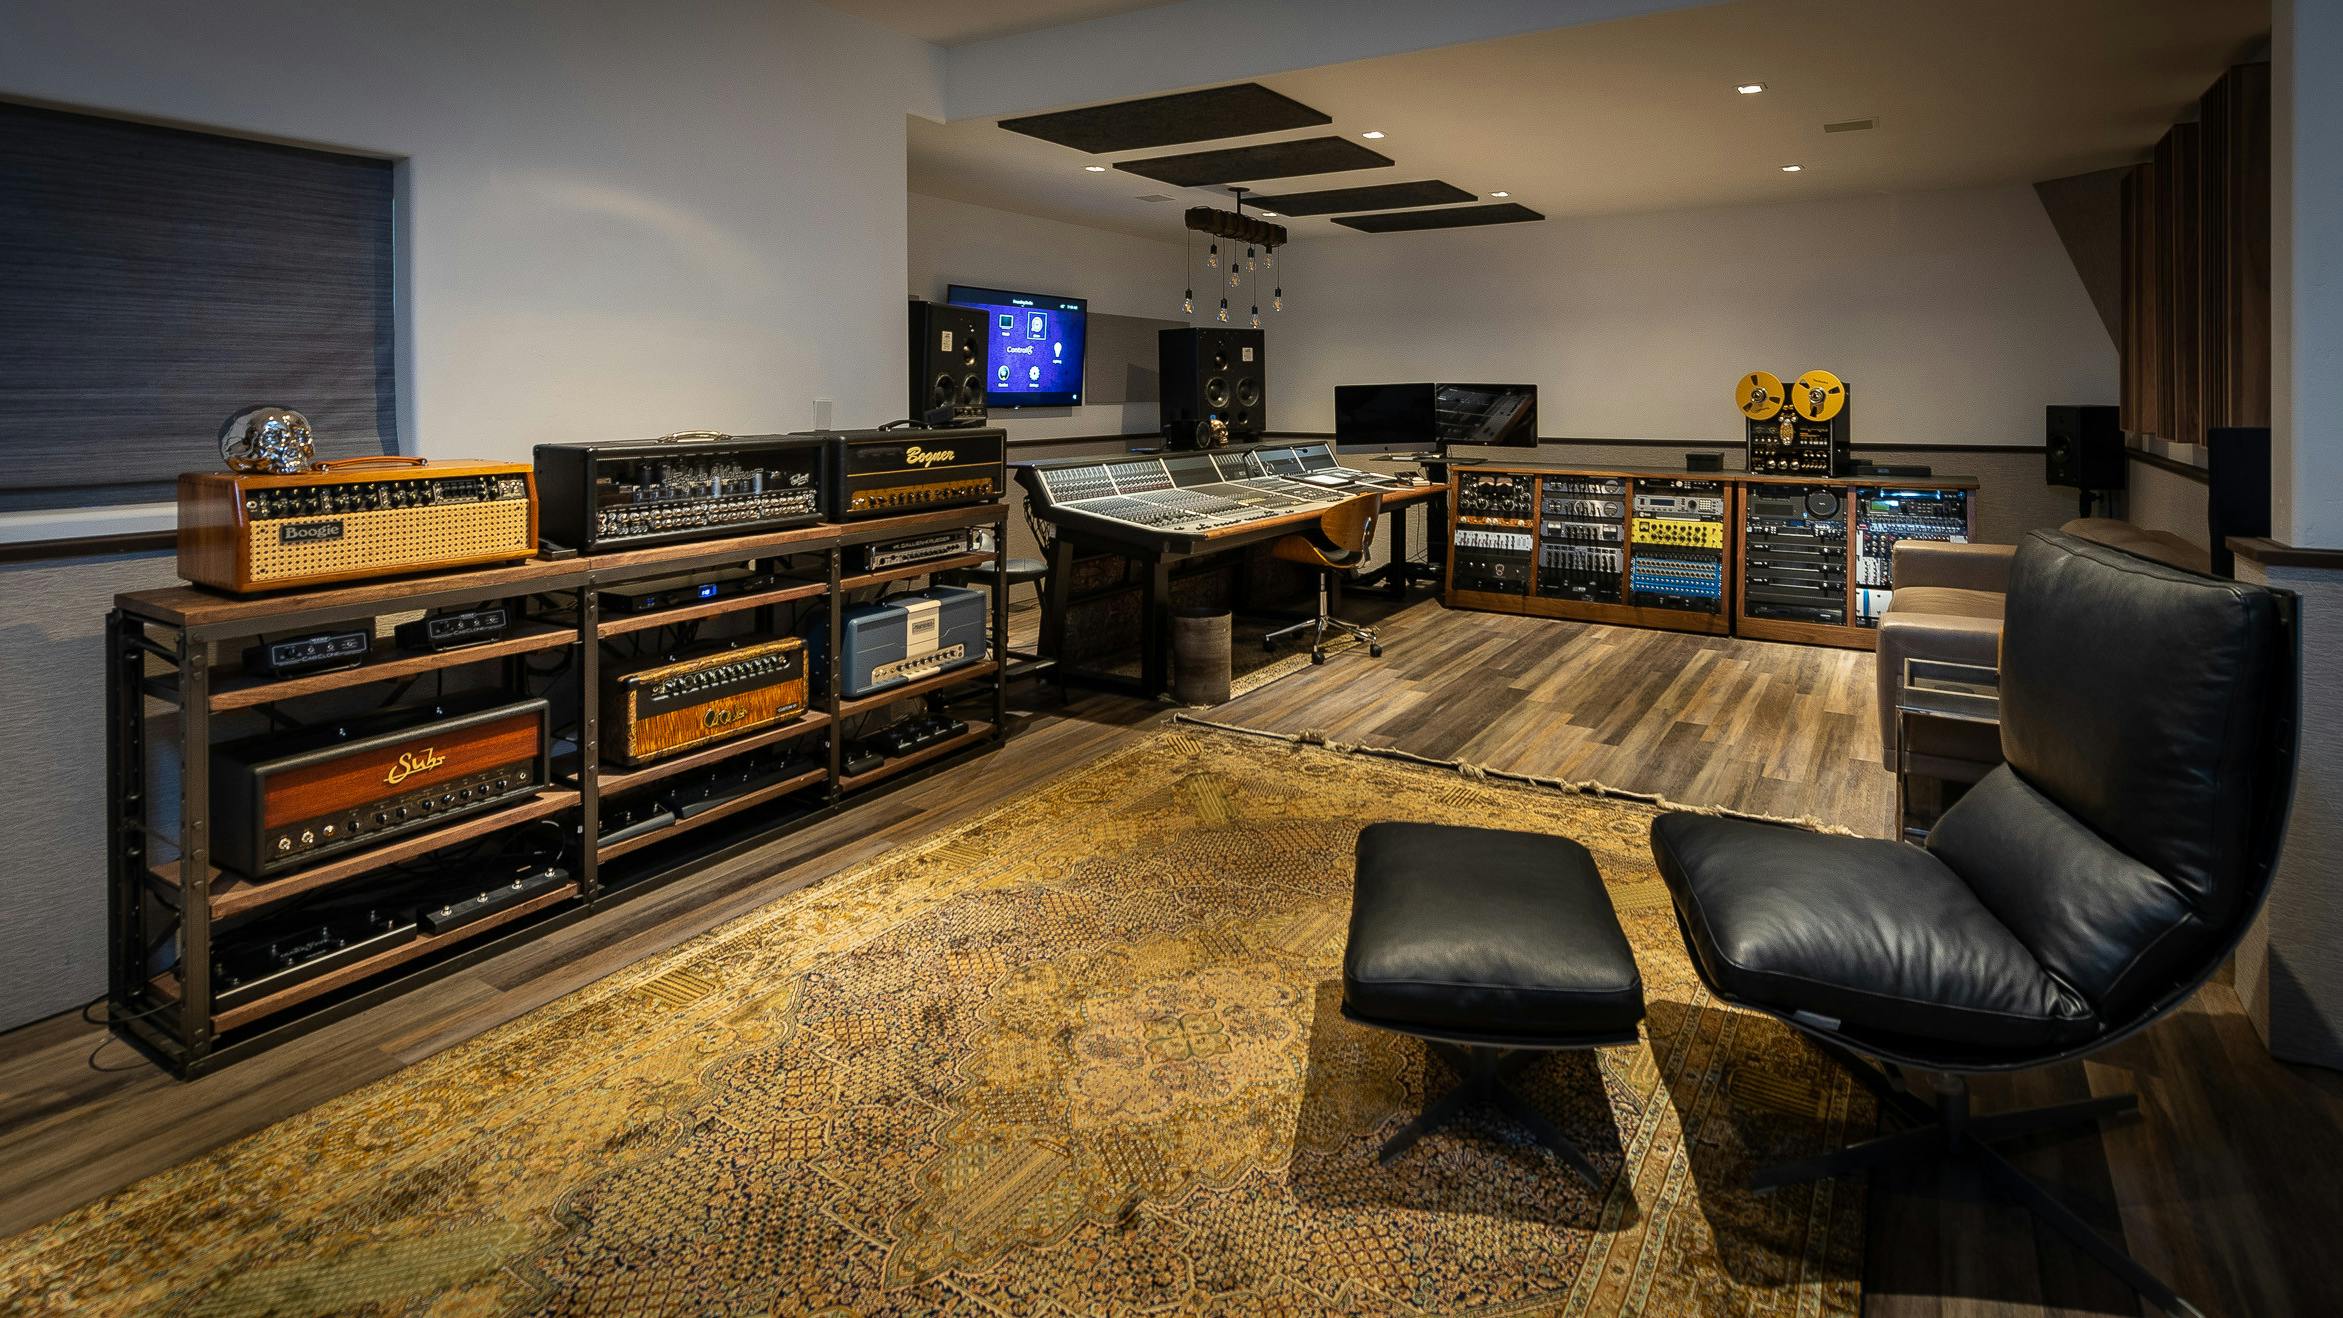 9 Incredible Home Recording Studio Ideas on Houzz - Output